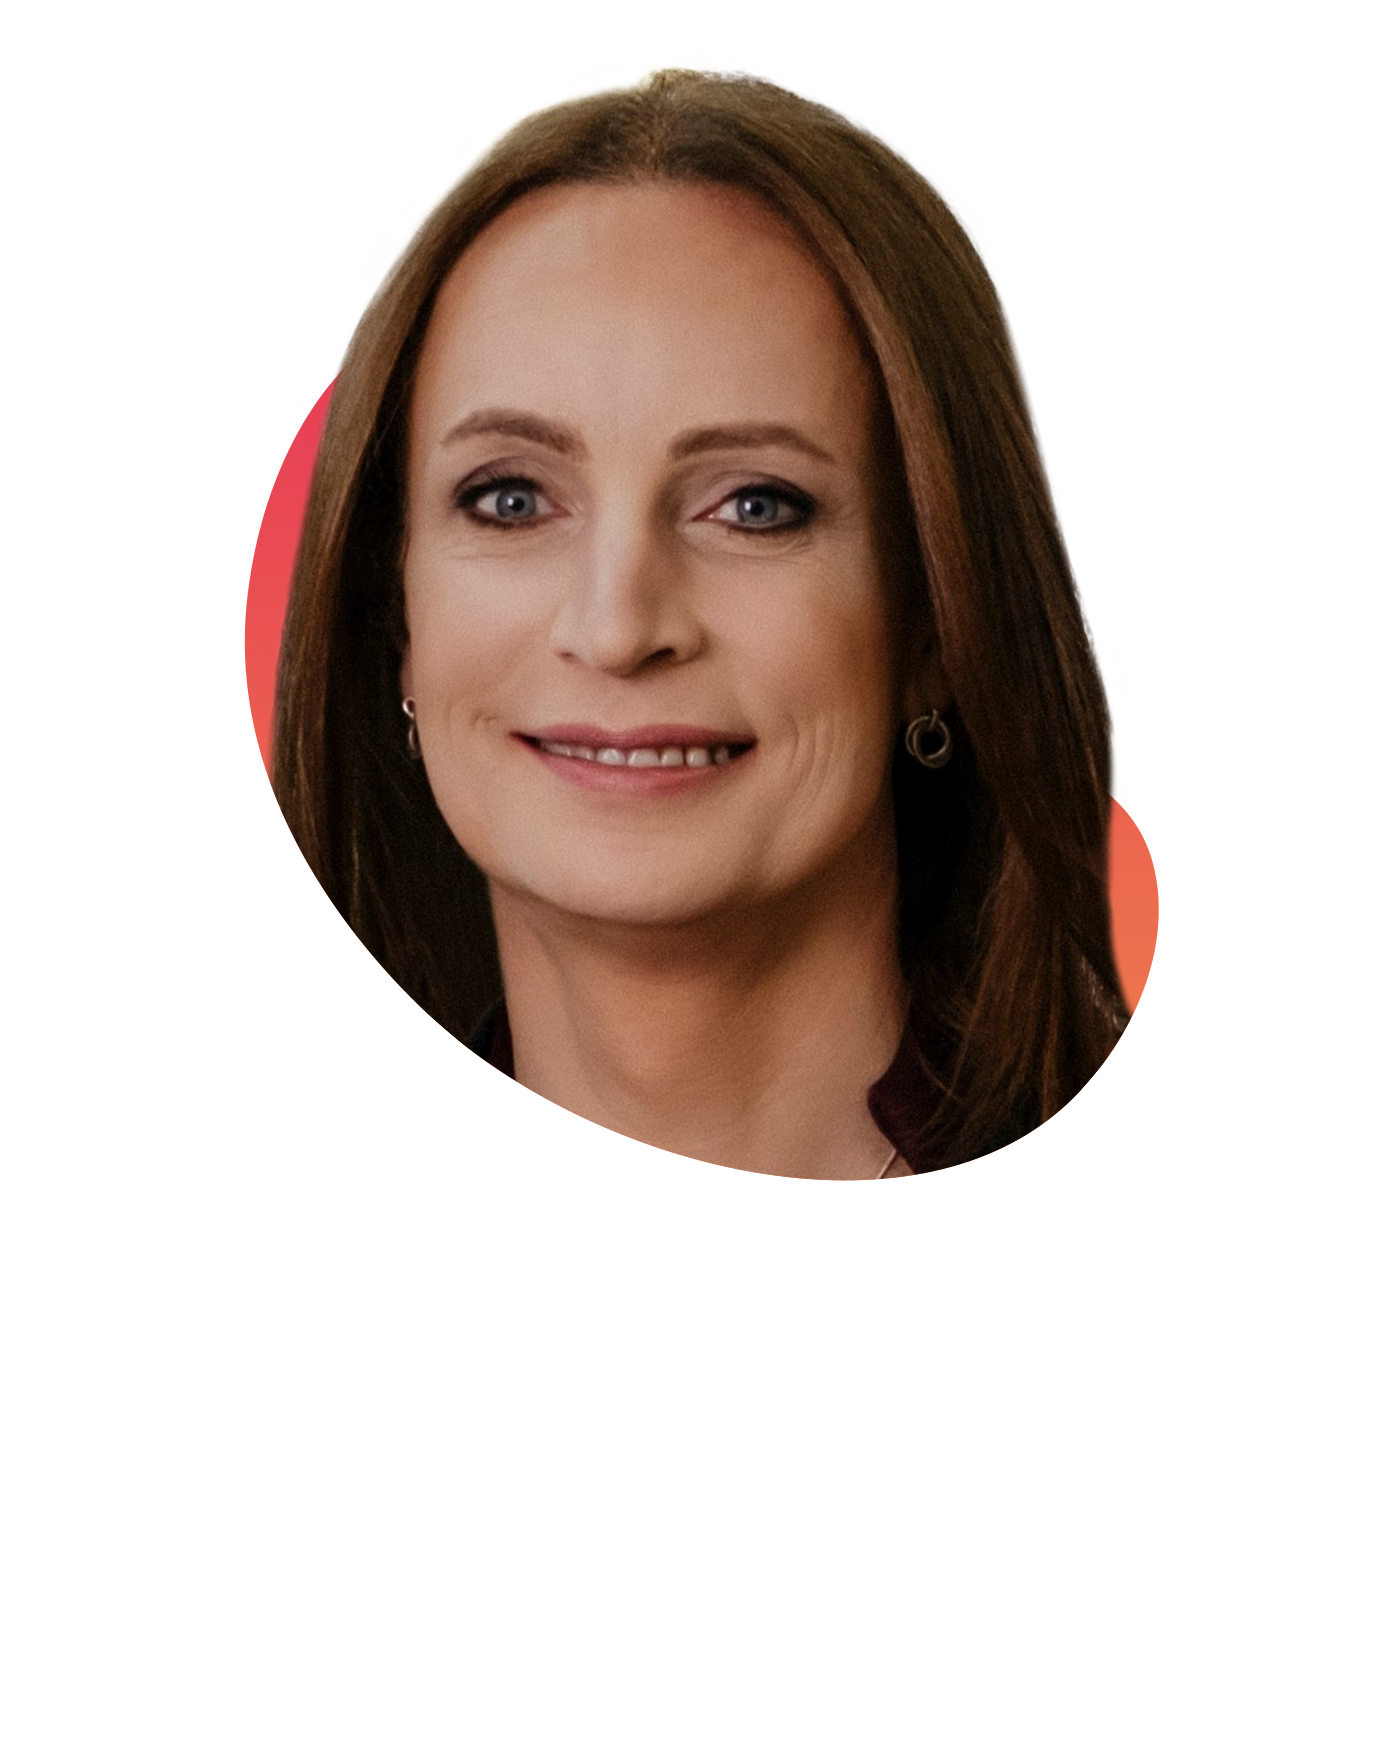 Caroline Ferberger